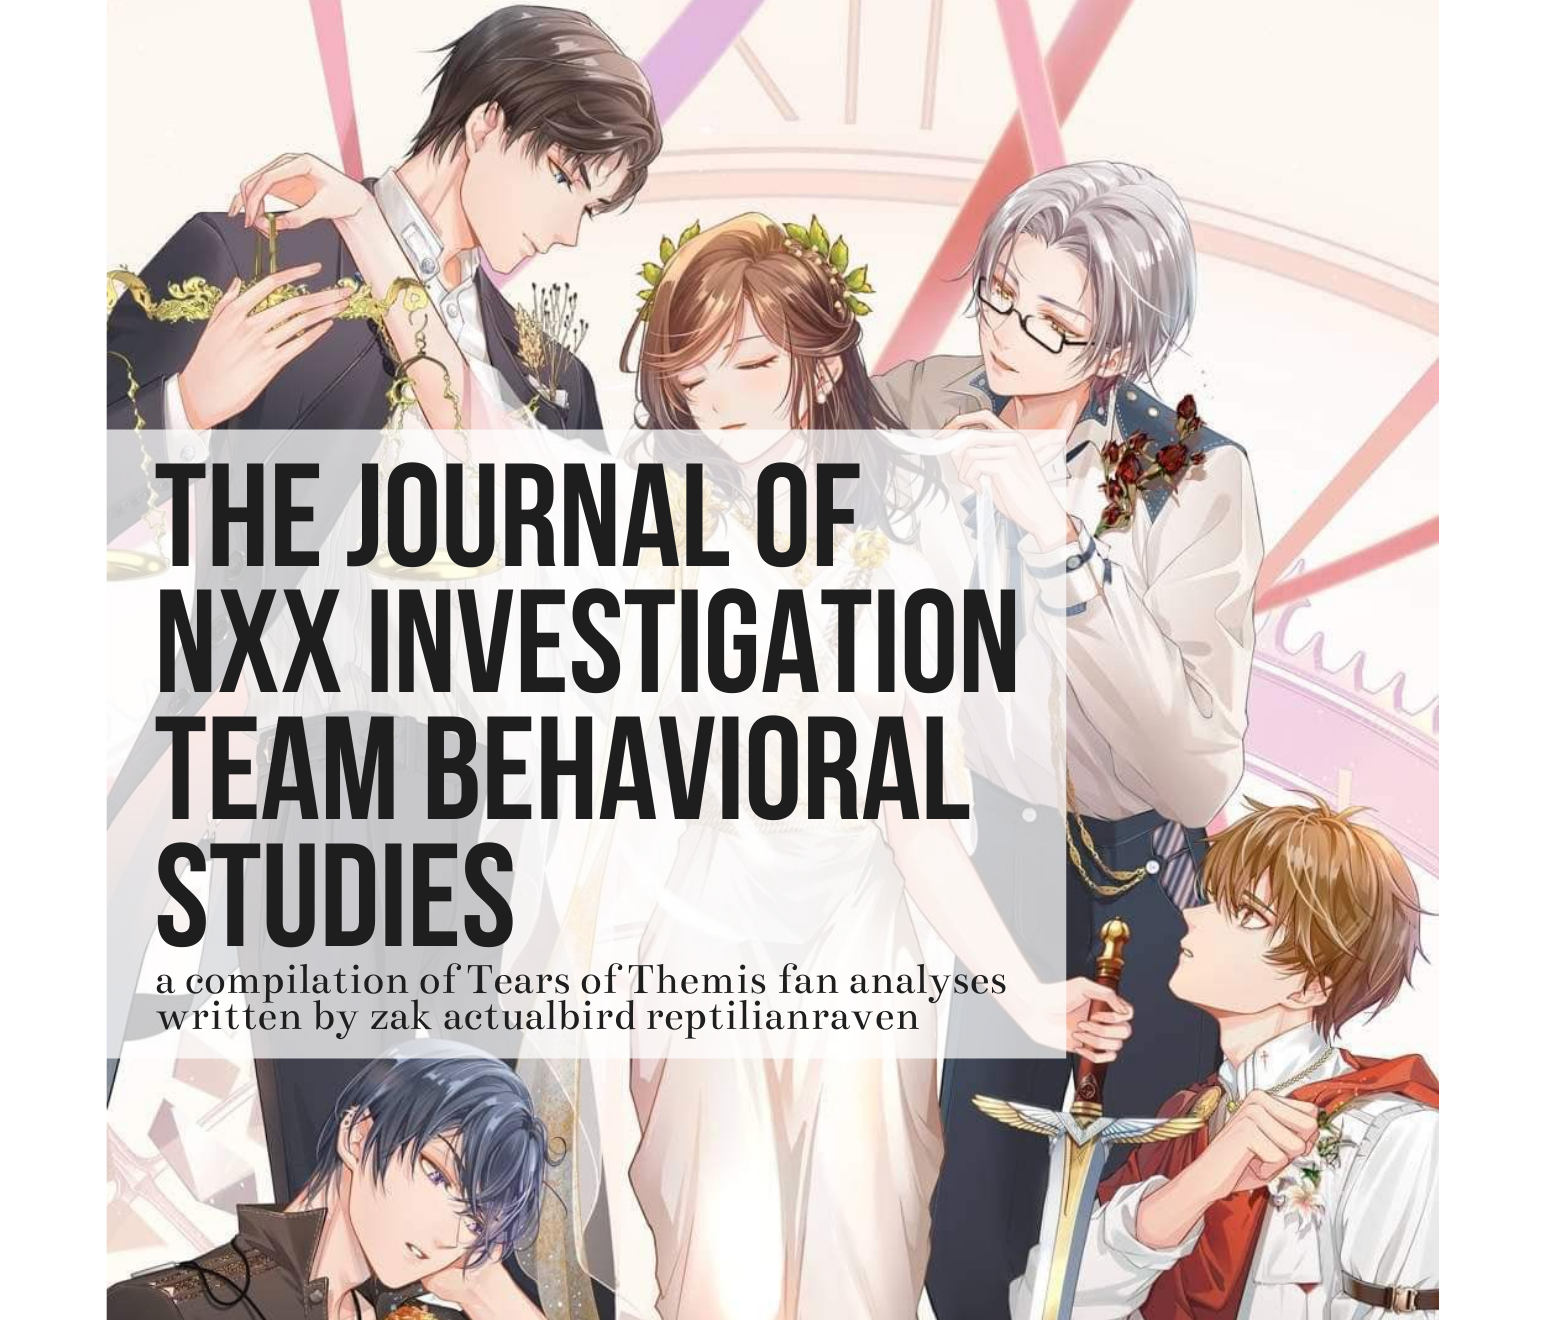 The Journal of NXX Investigation Team Behavioral Studies: Vol 1